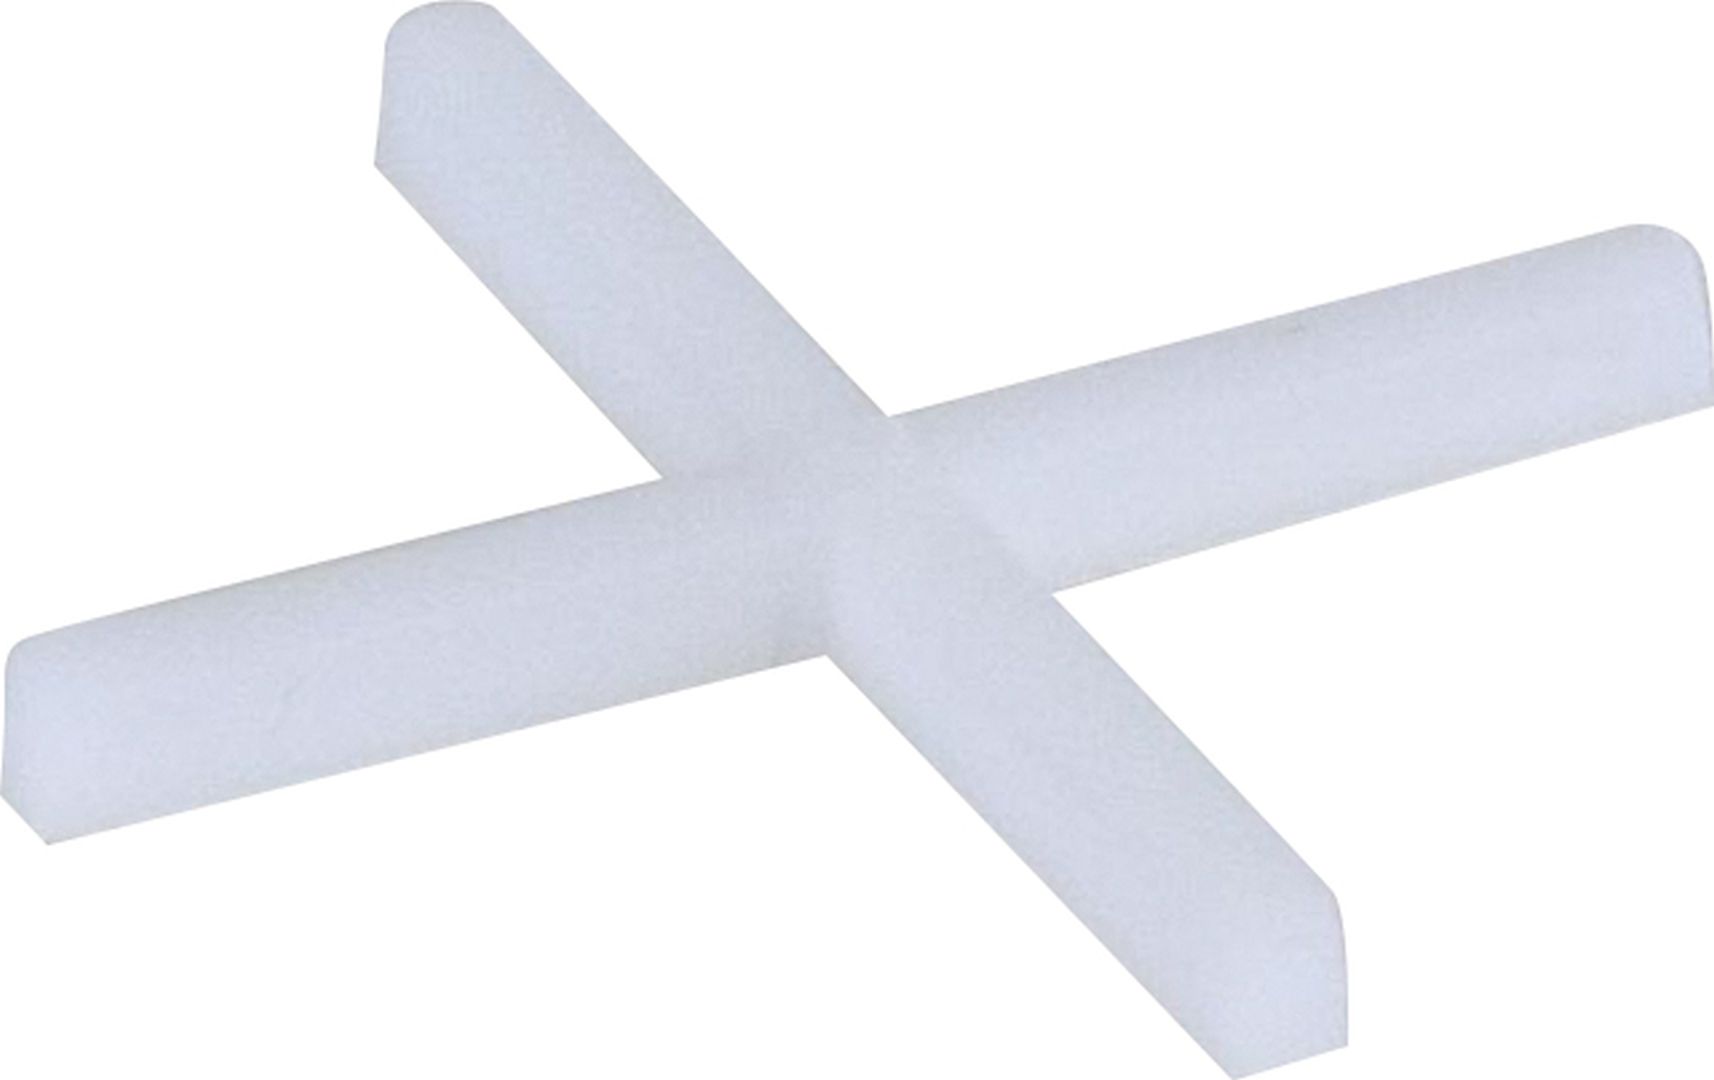 TRIUSO Fliesenkreuze aus Kunststoff, weiß, 250 Stück, 1,5 mm